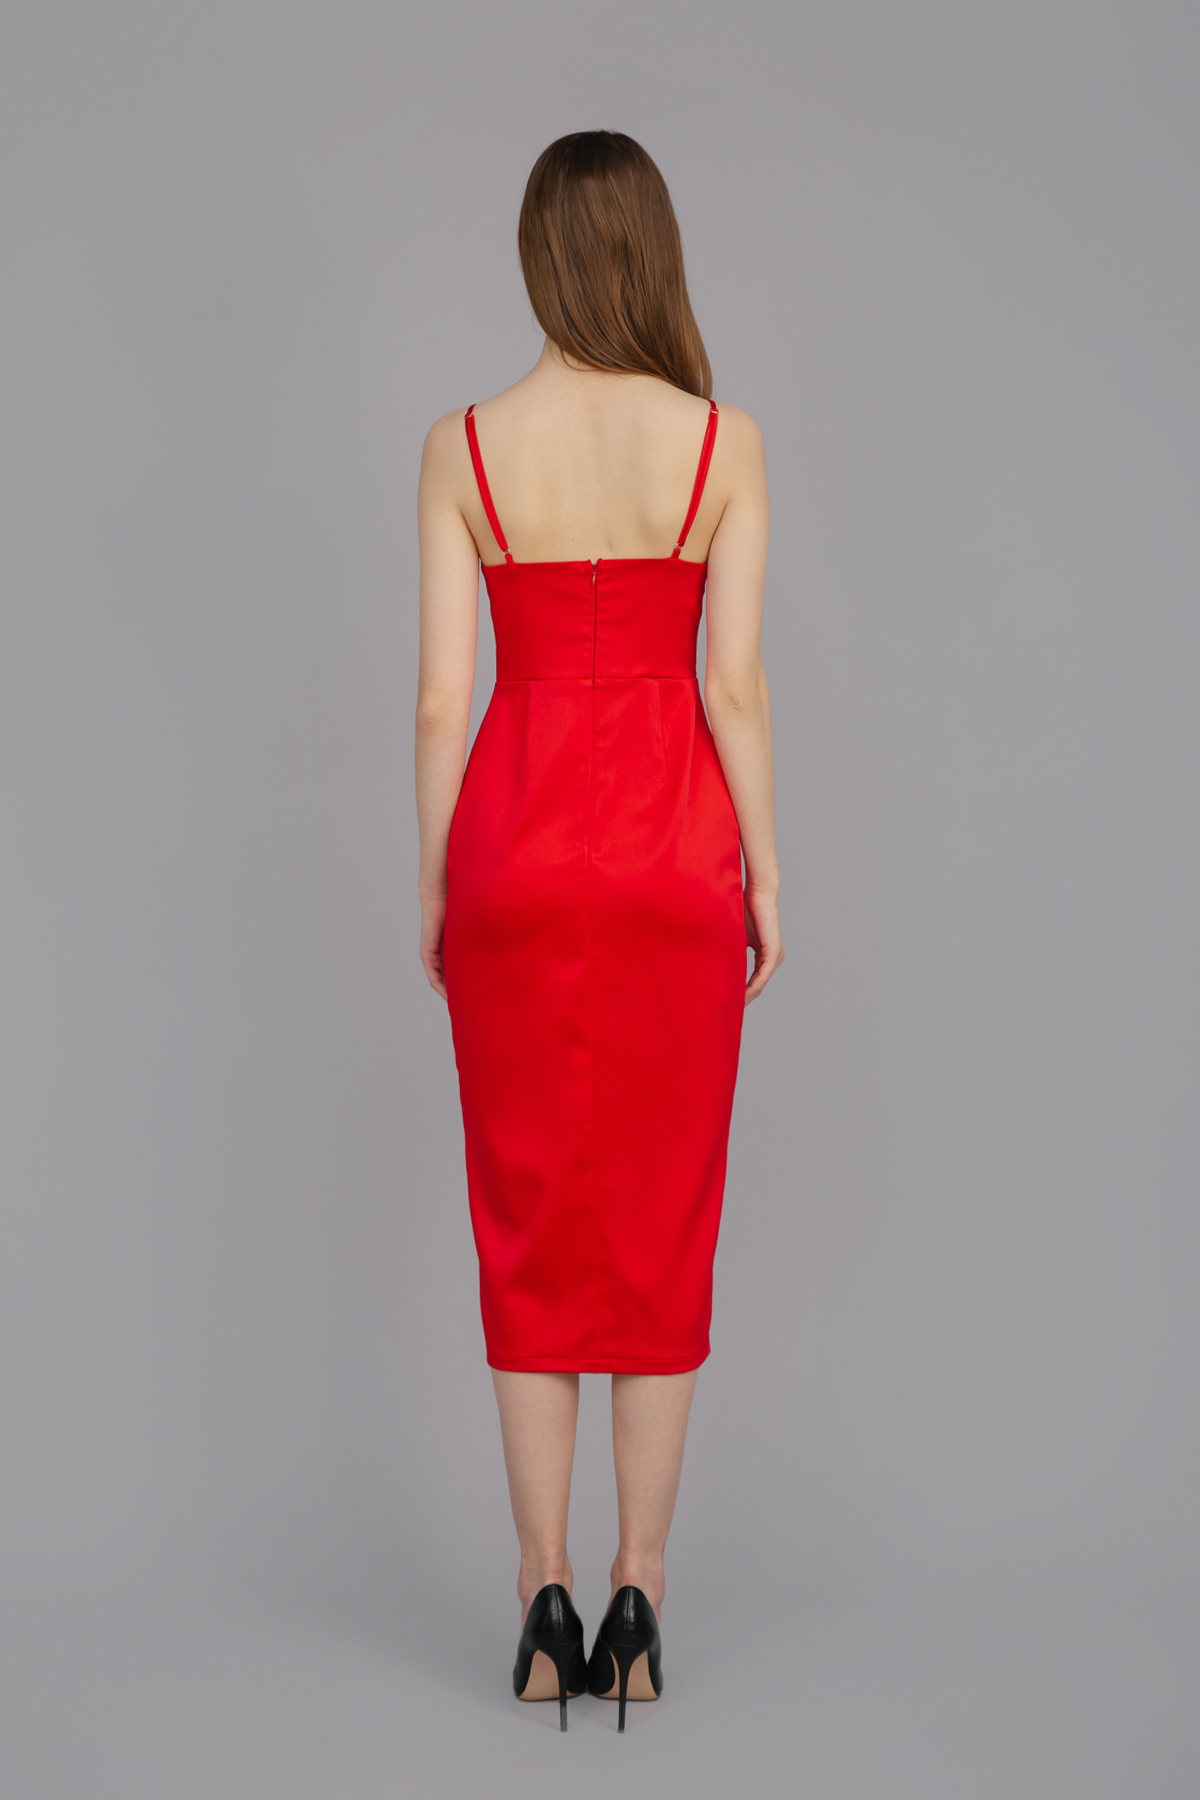 Red satin slip dress with cut-off waist, photo 2